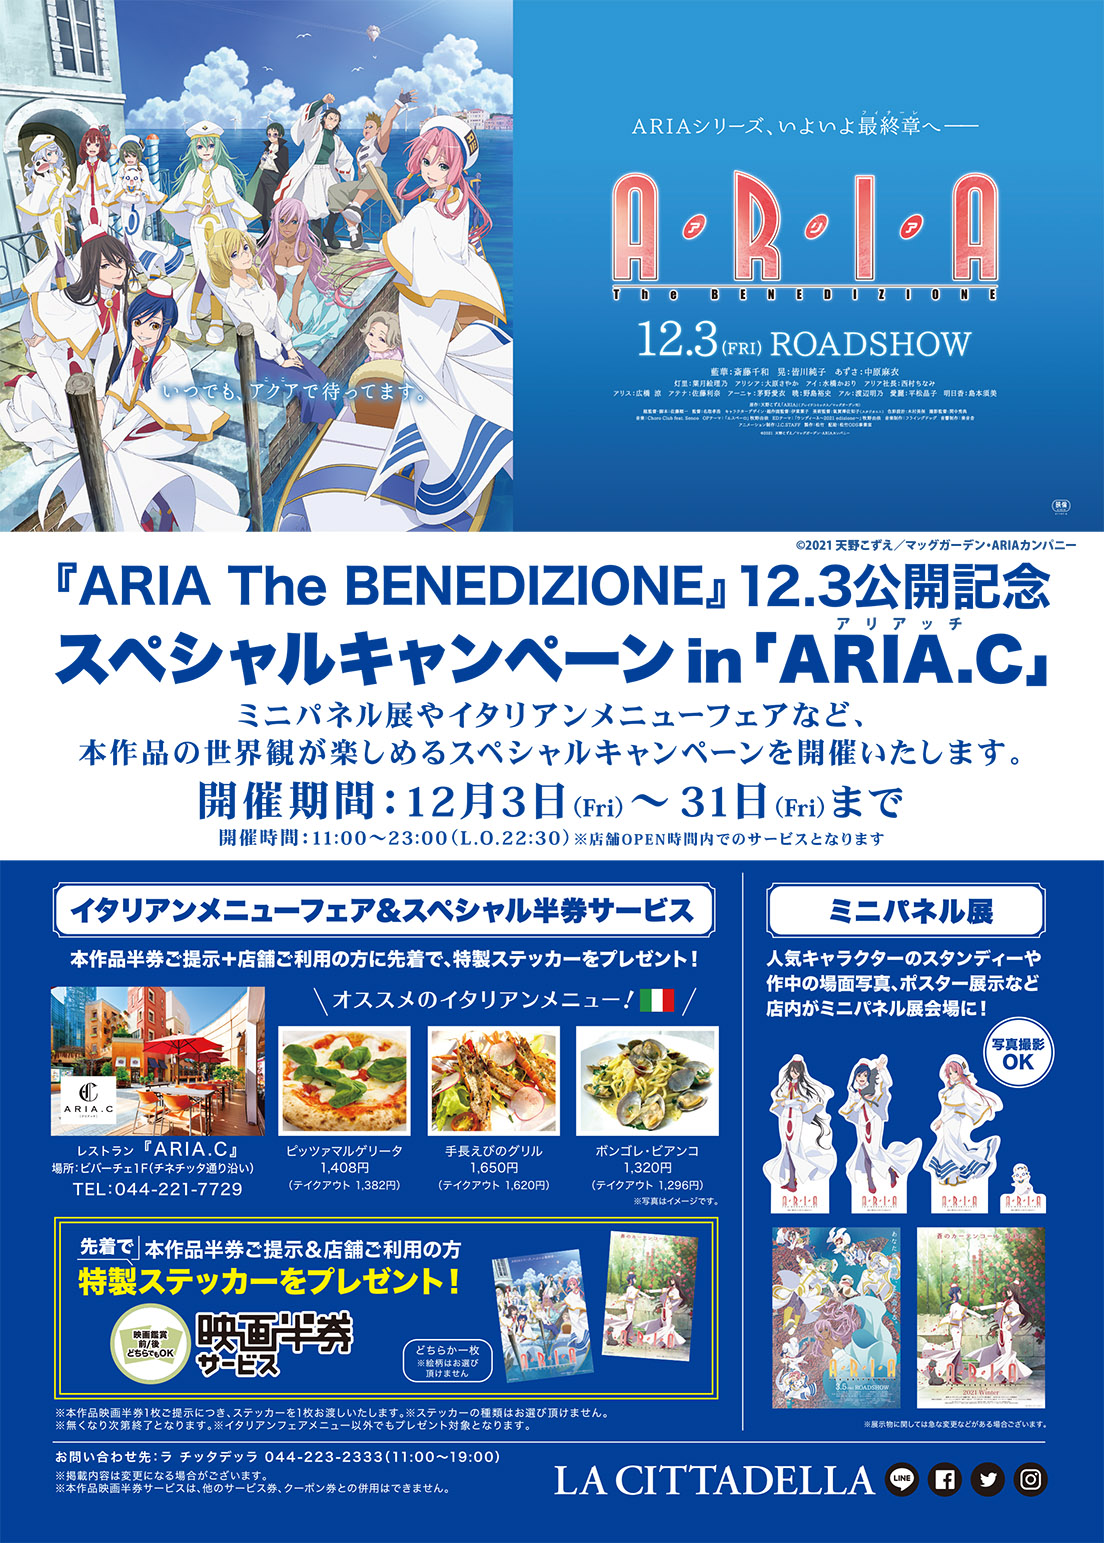 Aria The Benedizione 12 3 公開記念 スペシャルキャンペーン In Aria C 開催 Aria The Benedizione 公式サイト